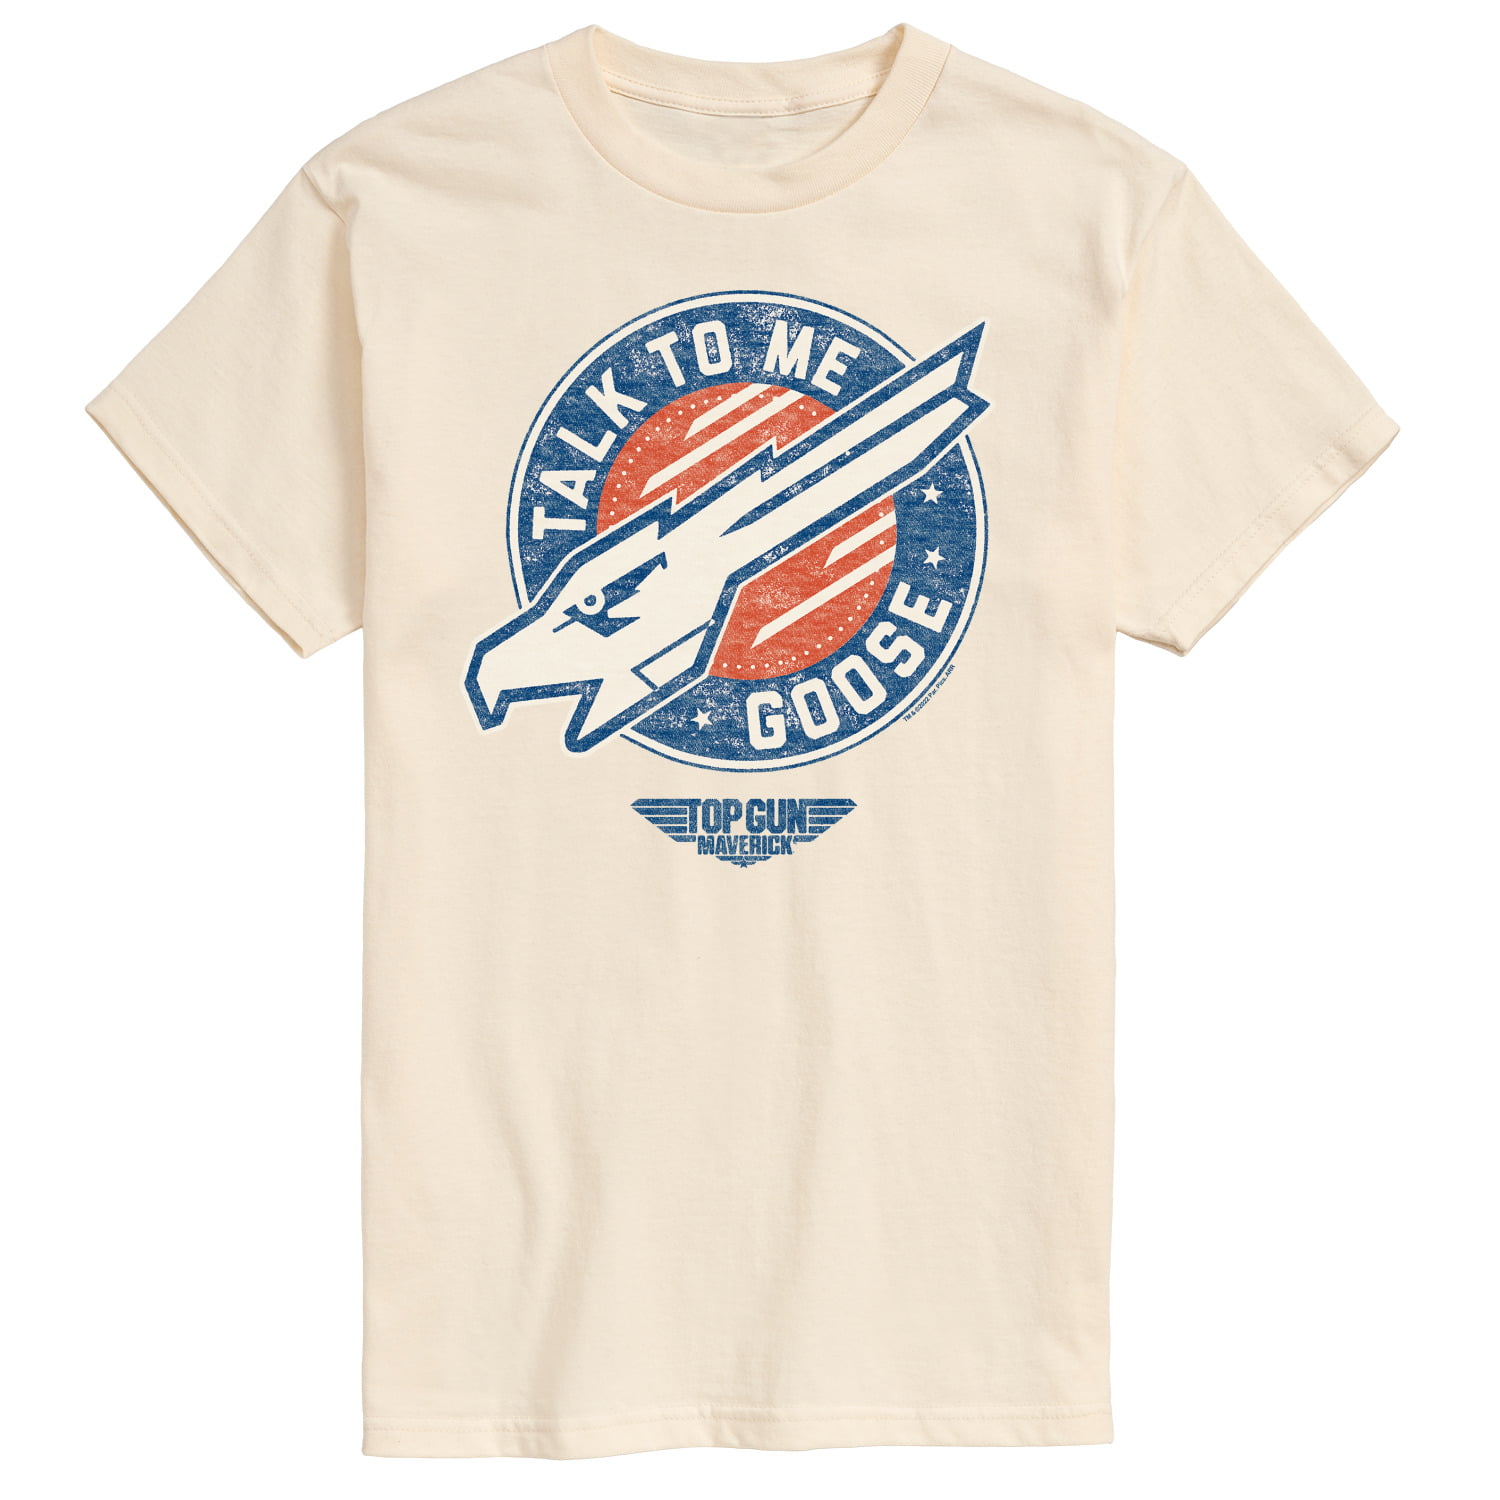 Top Gun: Maverick - Talk To Me Goose - Men\'s Short Sleeve Graphic T-Shirt | T-Shirts